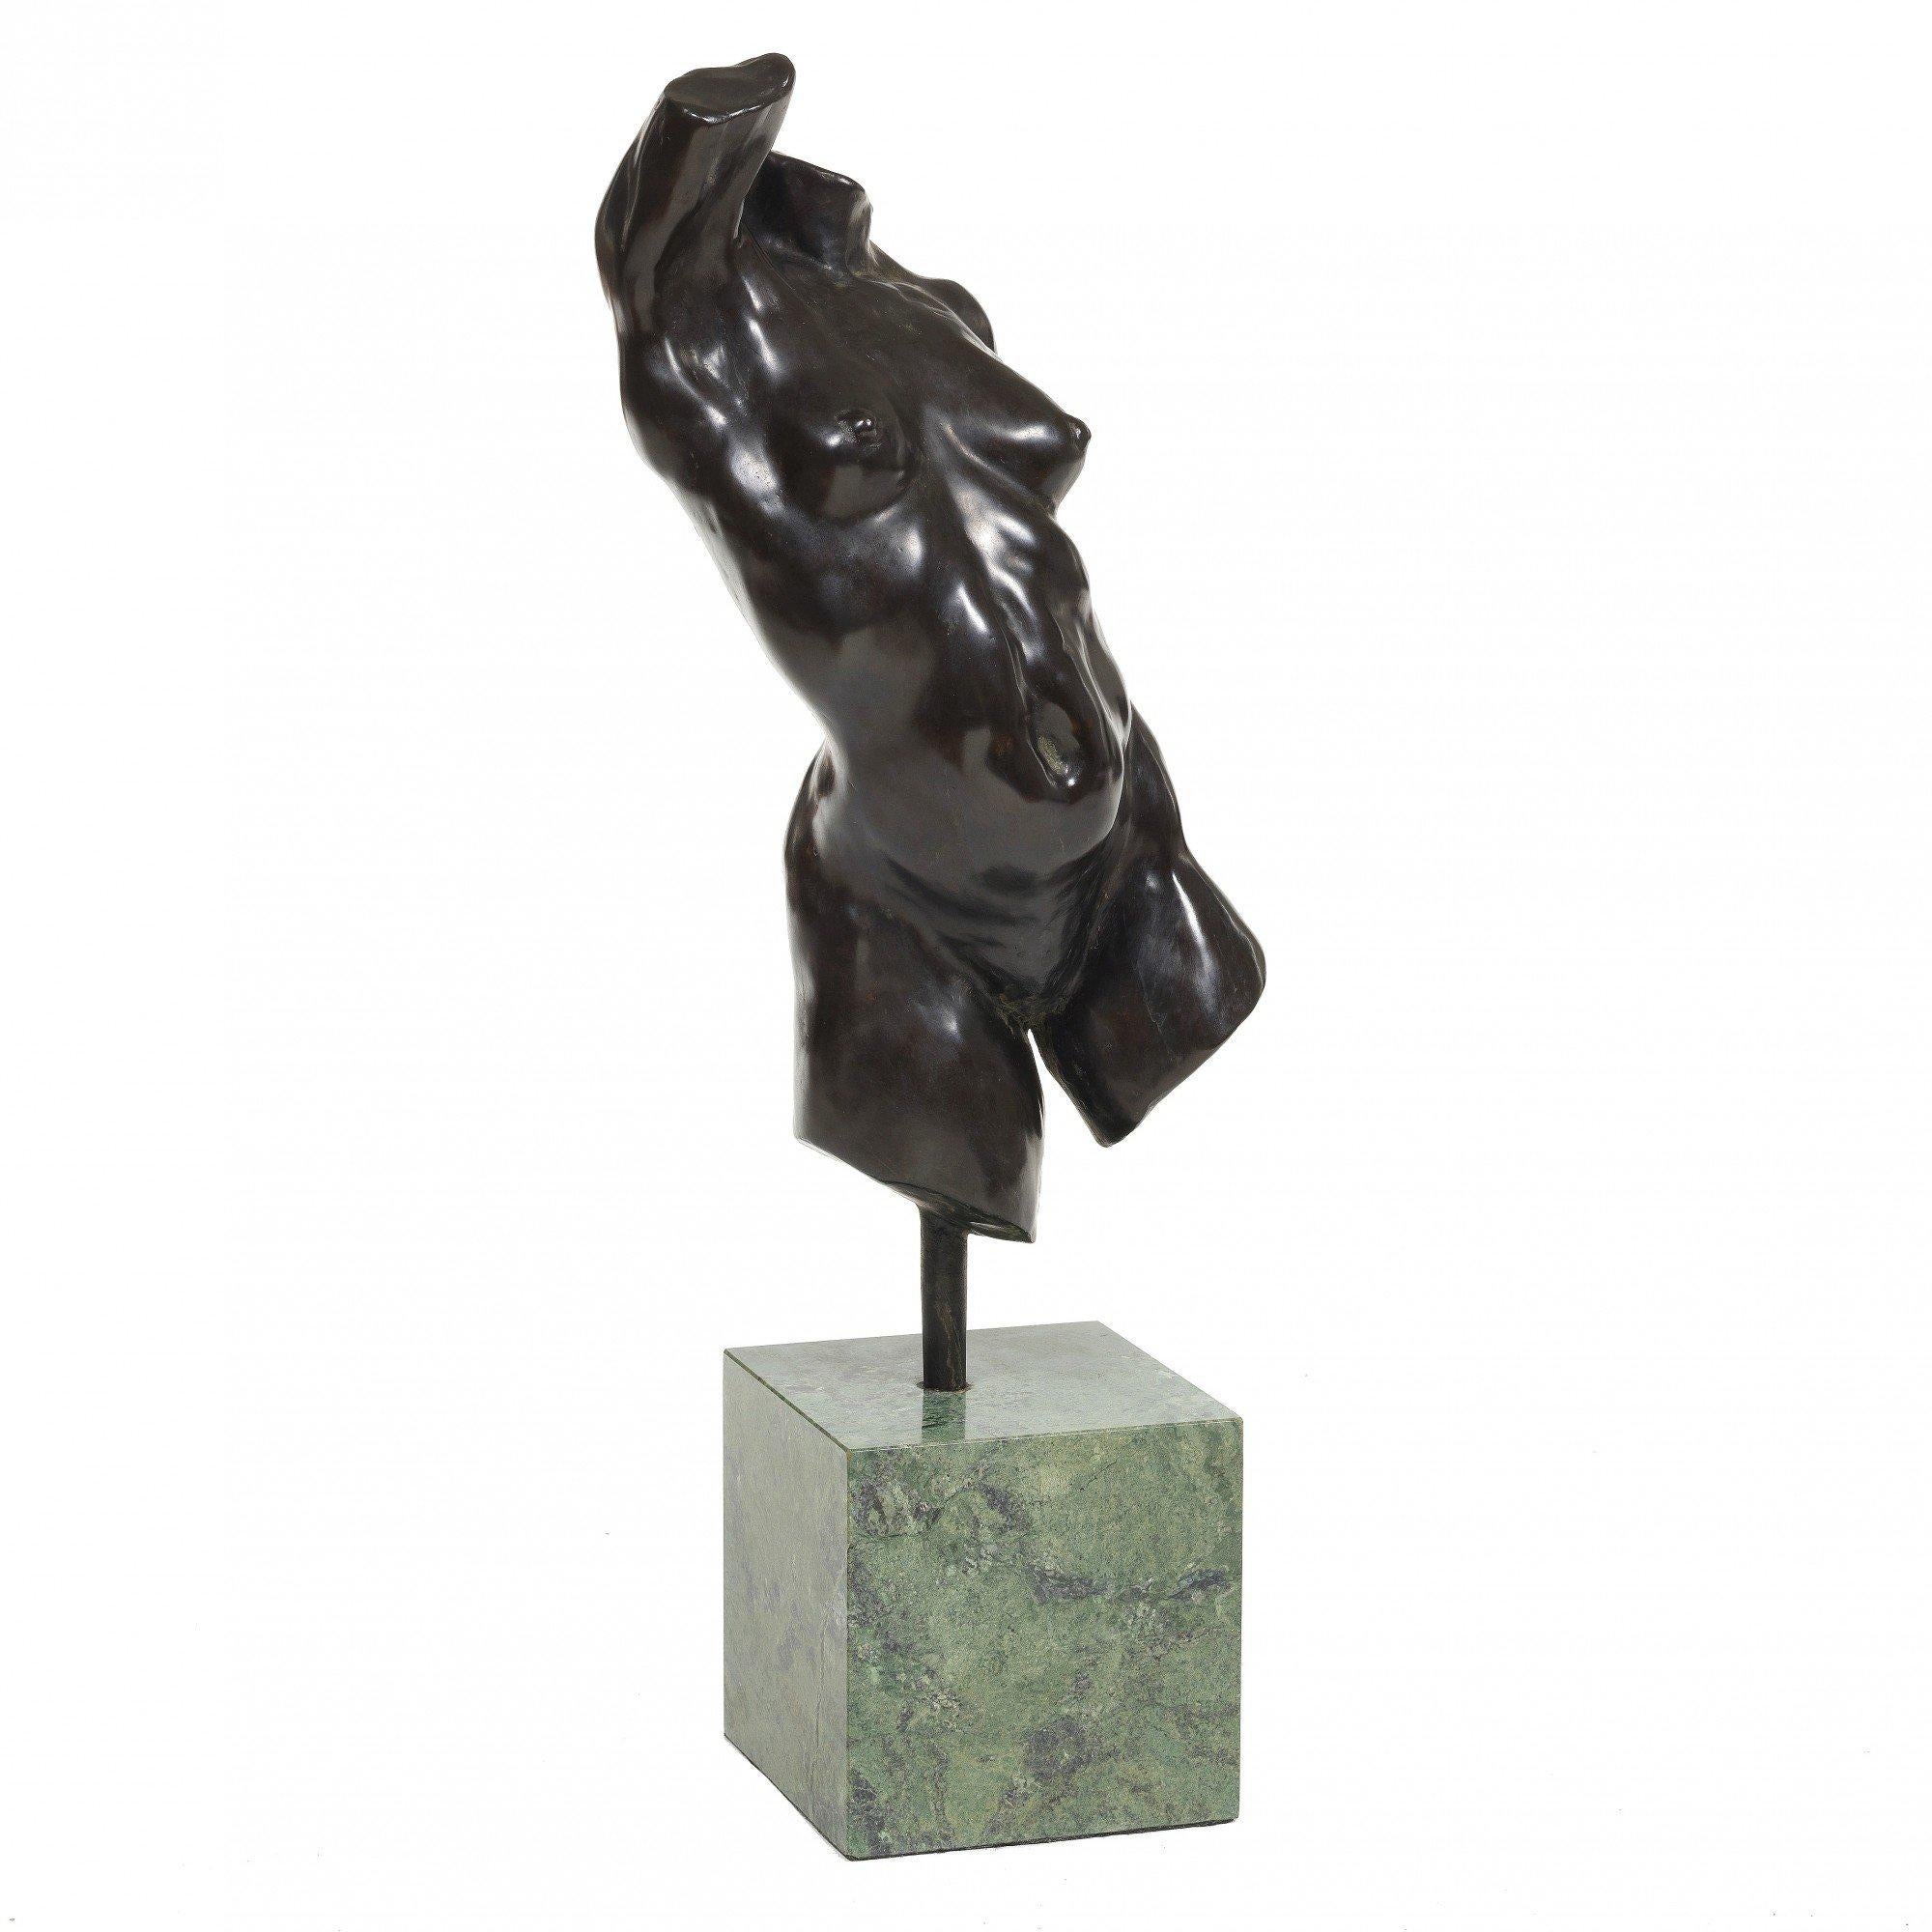 Figurative Sculpture de Alan Cottrill - Torso desnudo femenino Escultura de bronce, Artista estadounidense contemporáneo del siglo XX